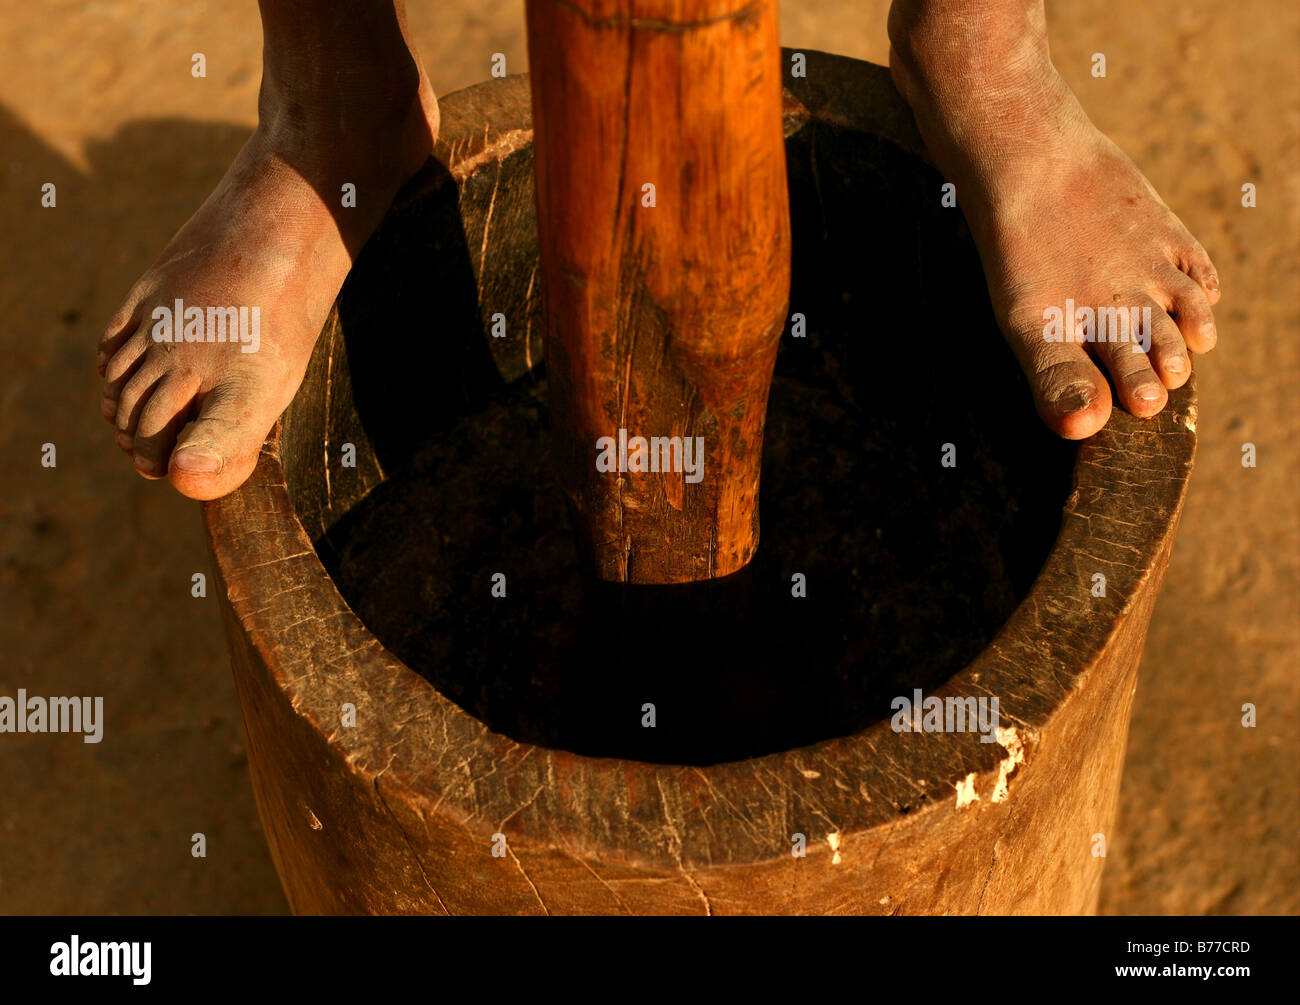 pounding grain in Laos Stock Photo